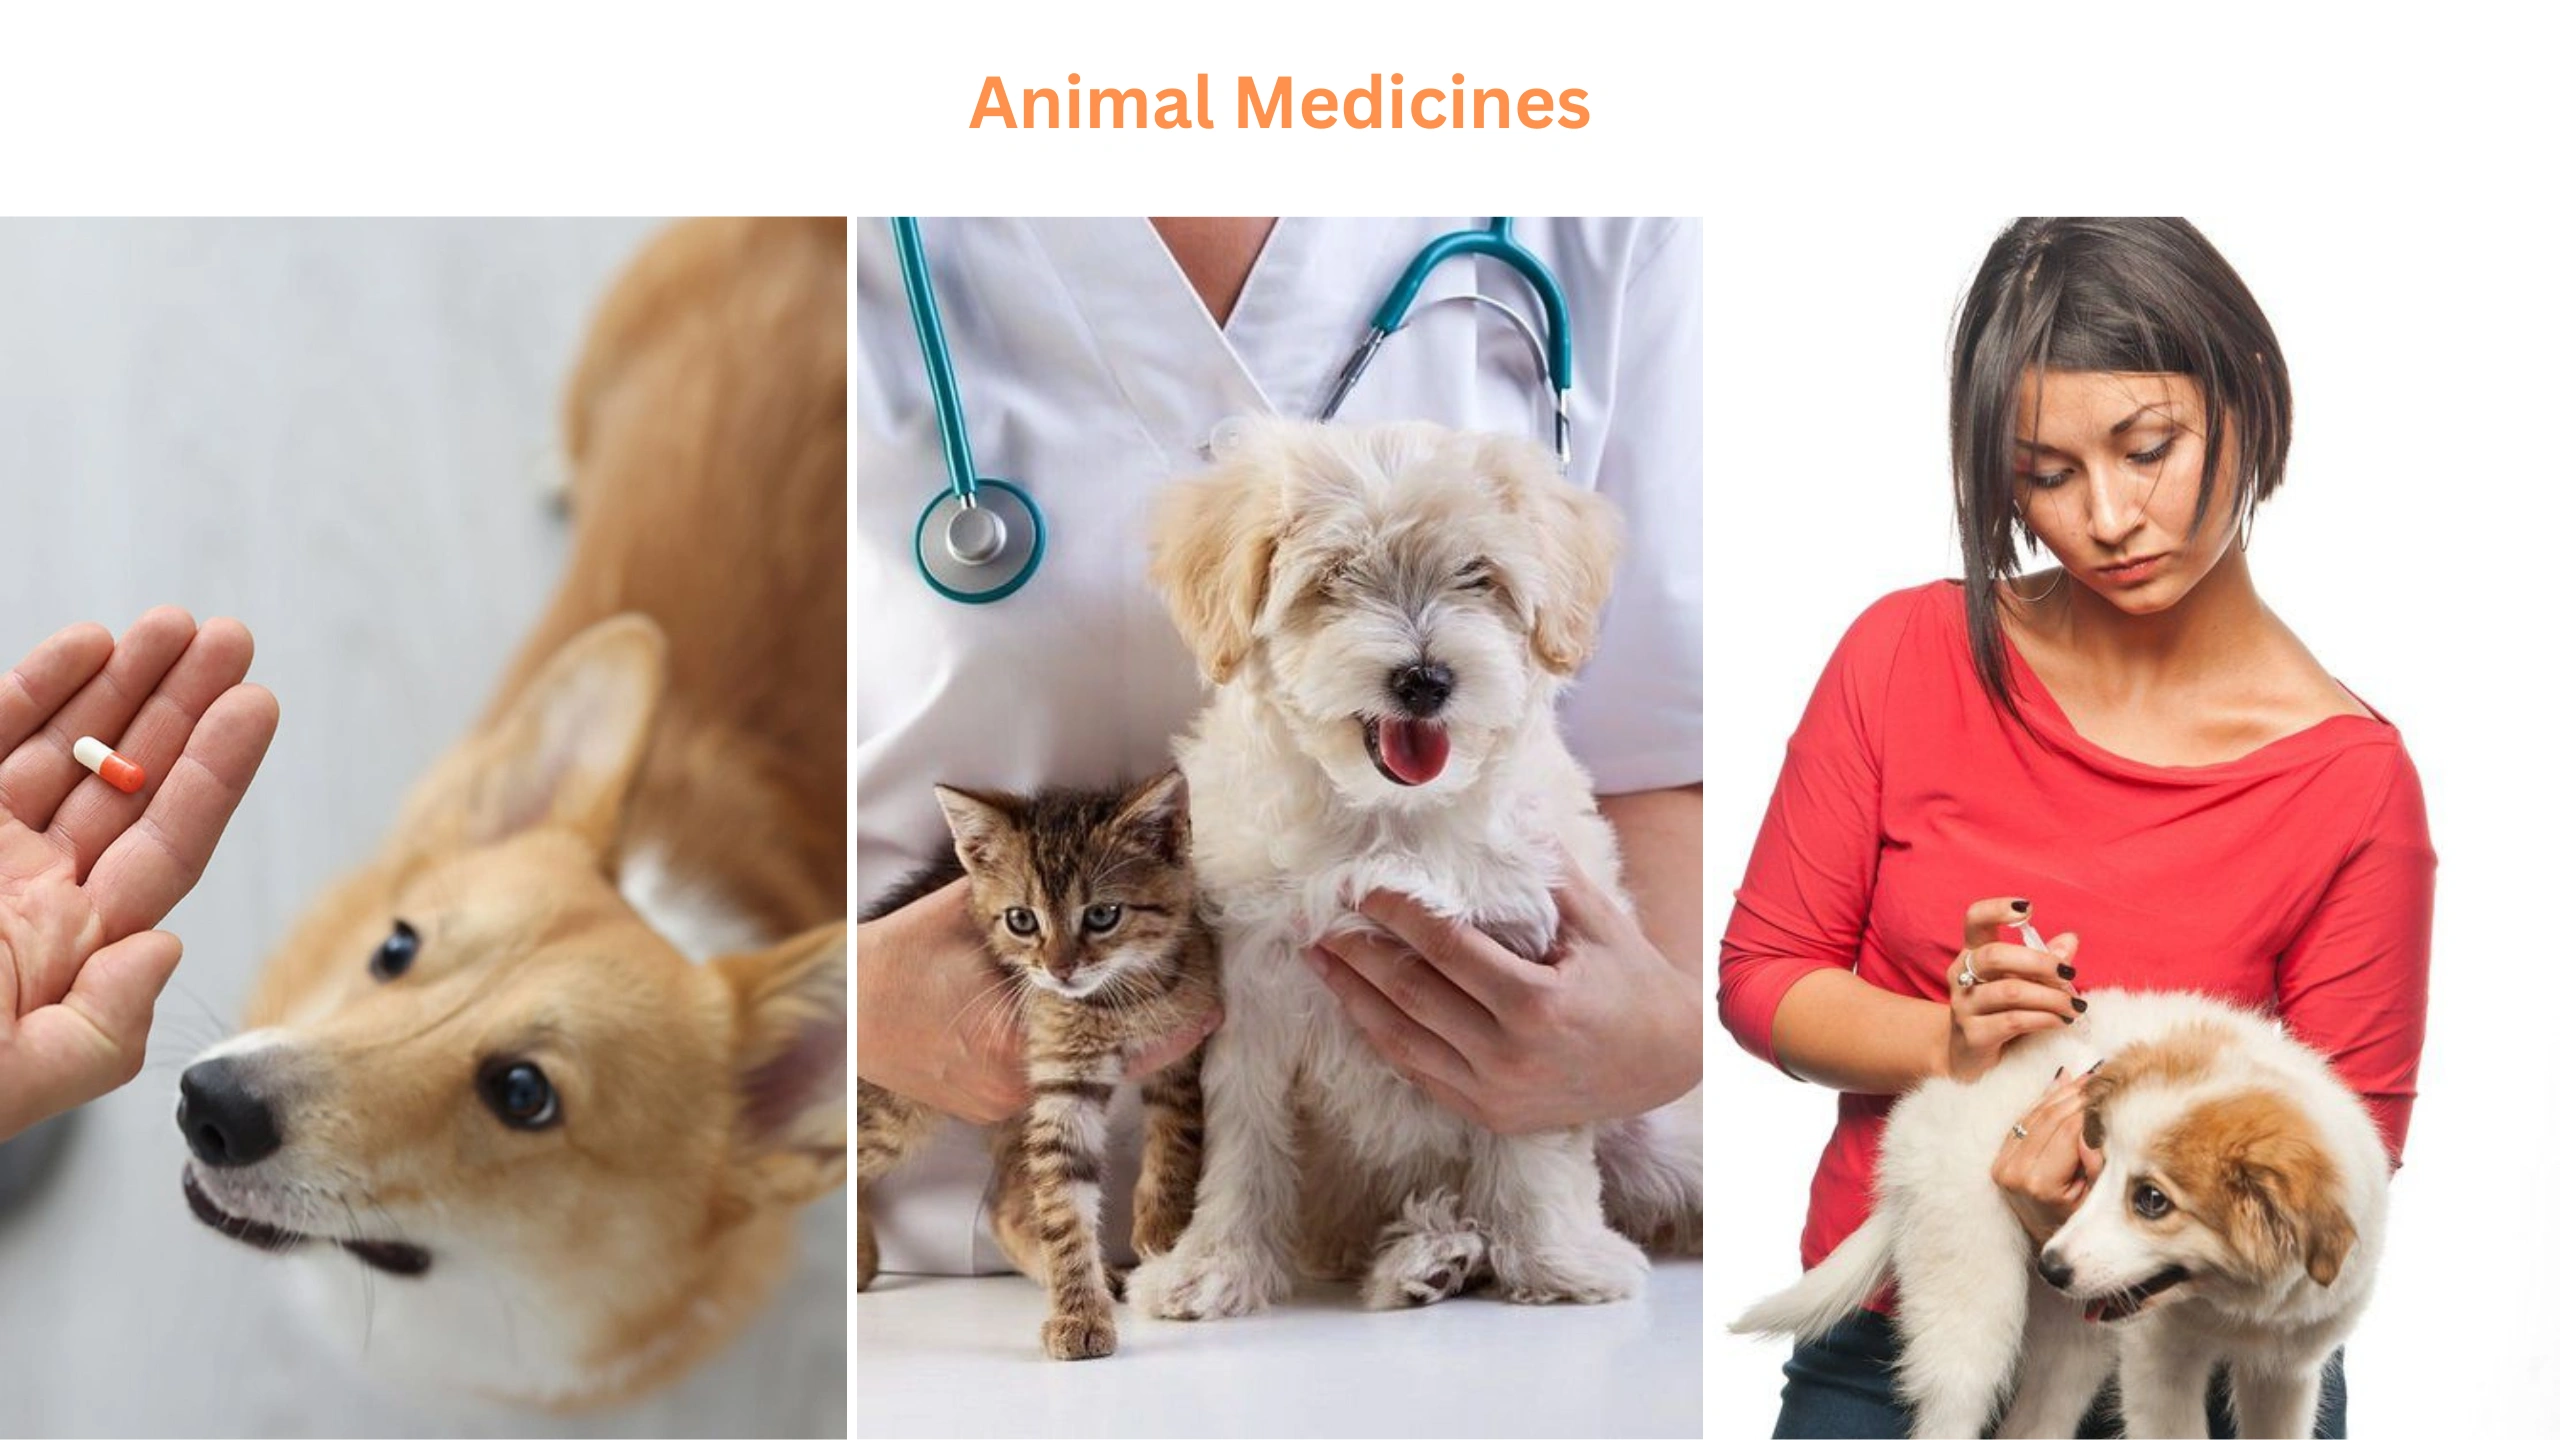 Animal medicines